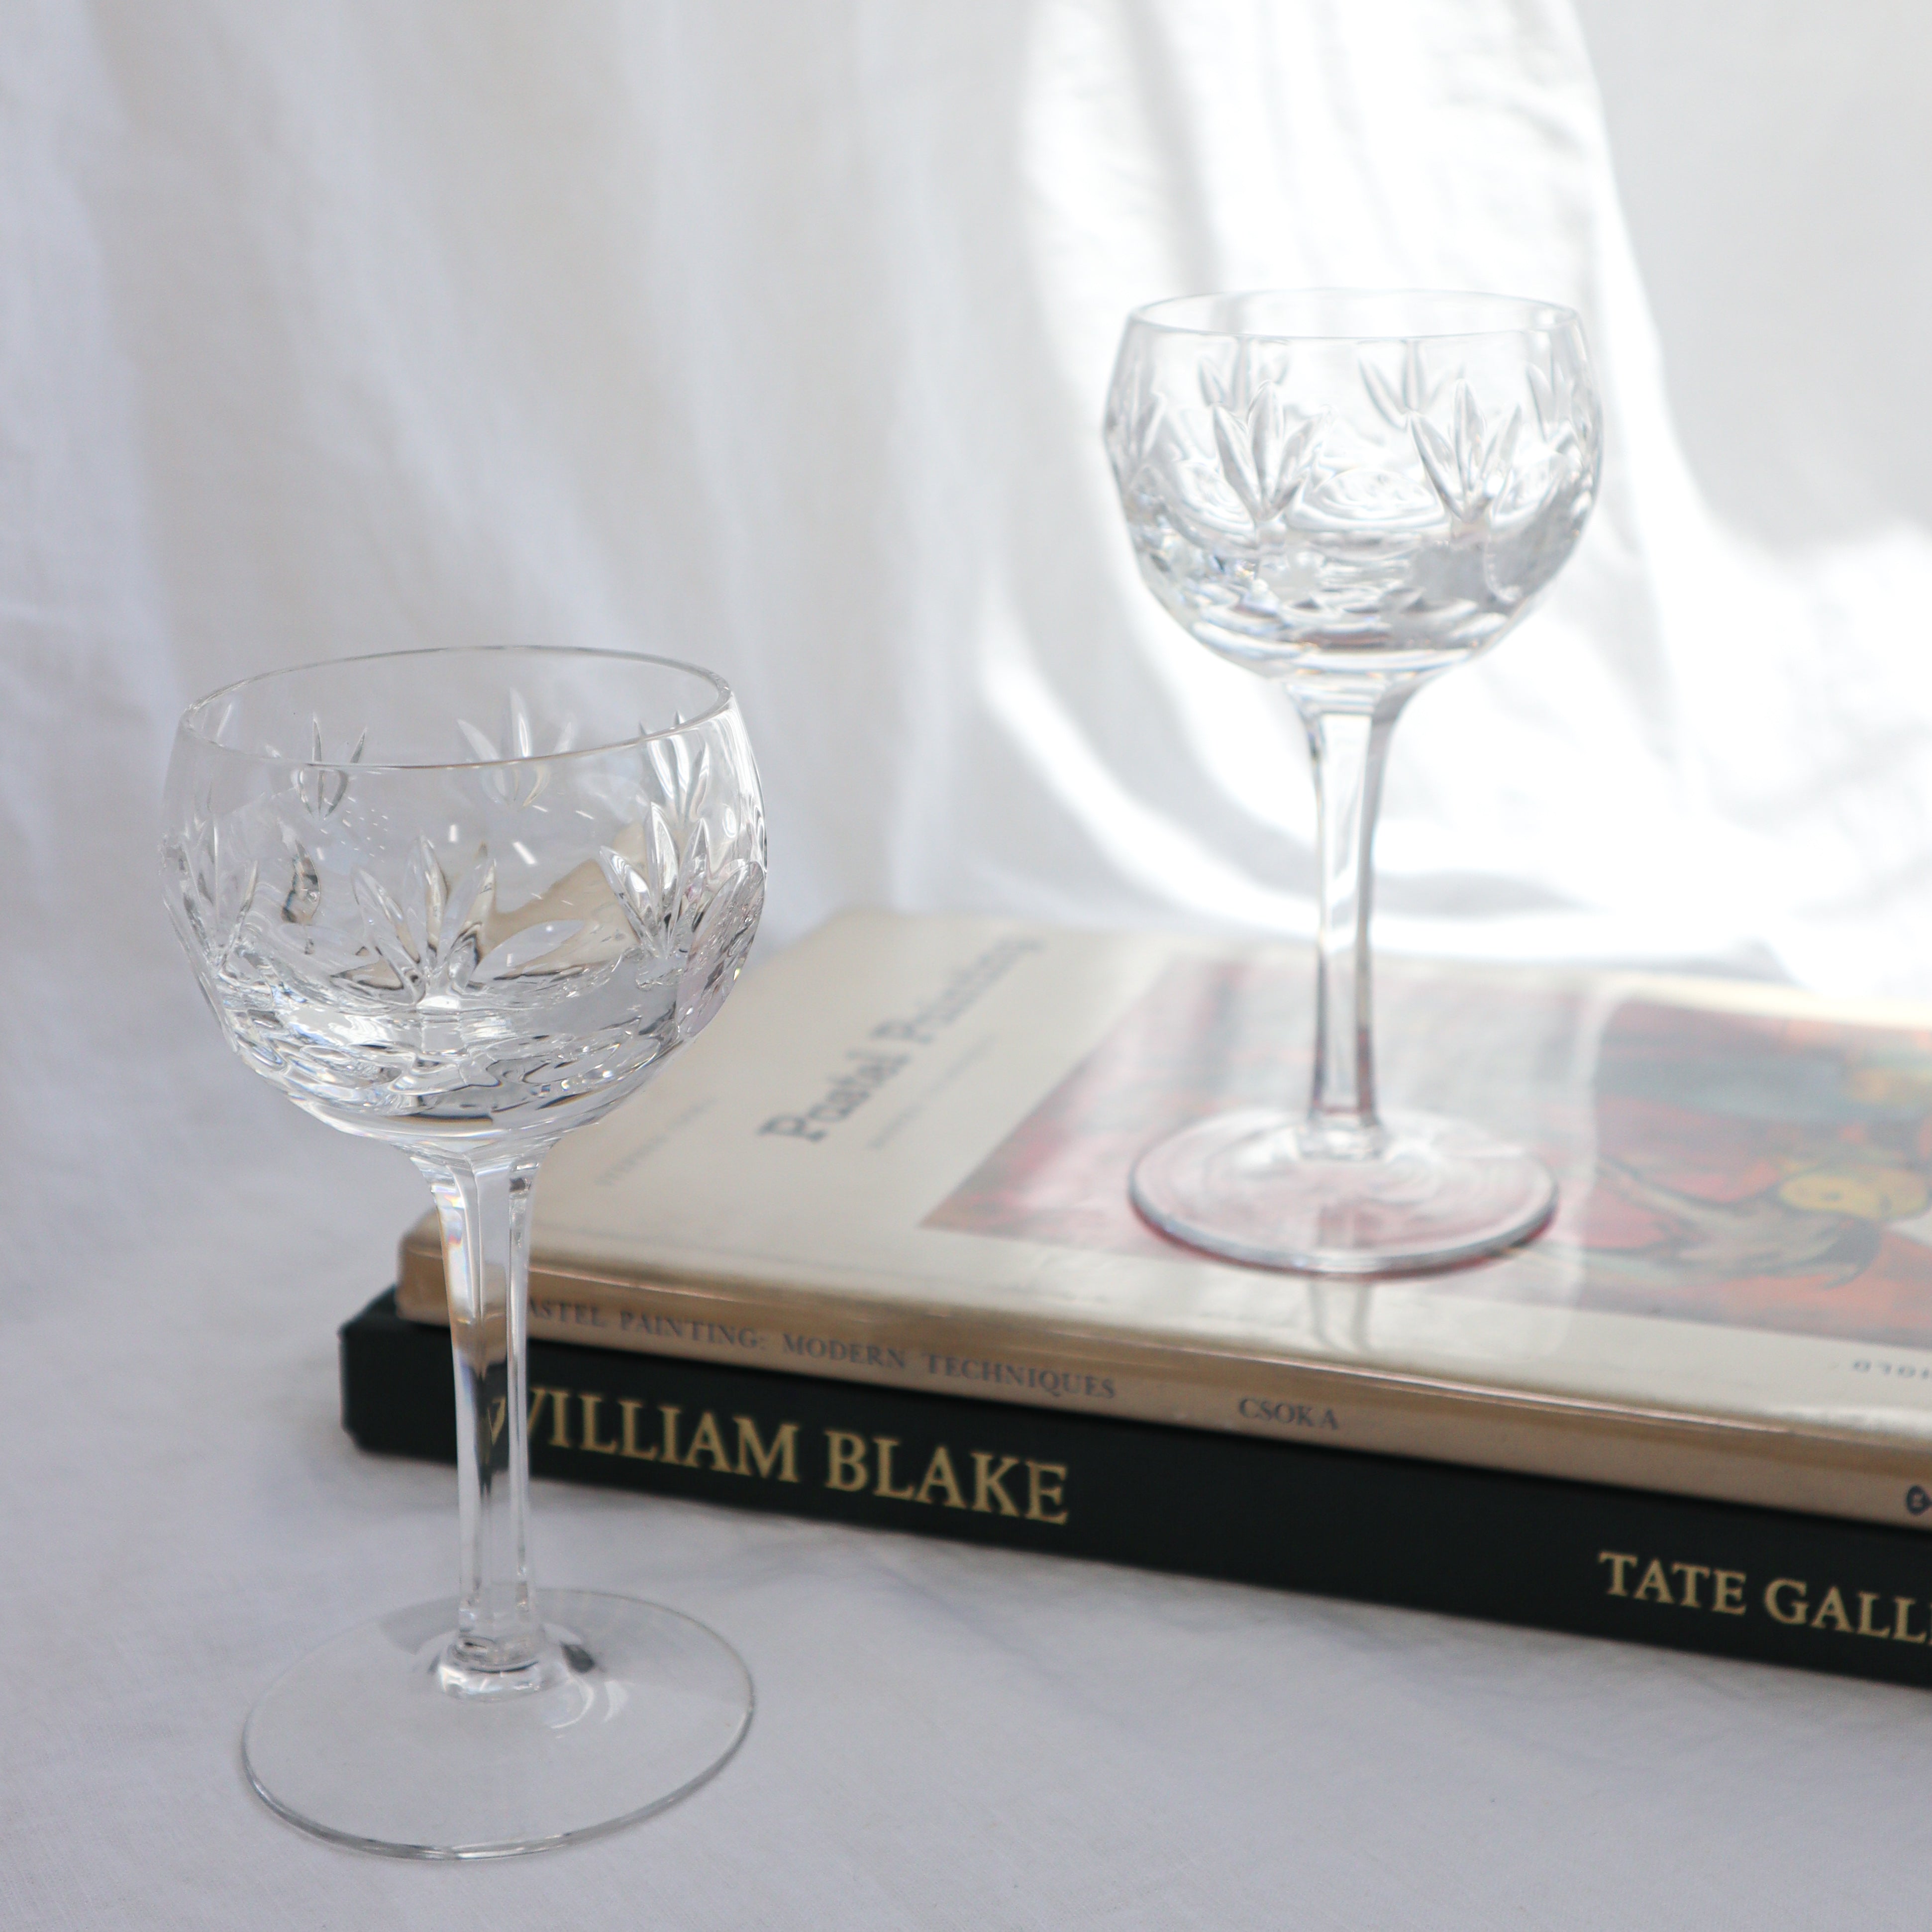 Stunning Cut Crystal Short Stem Gobet/wine Glasses. Set of 2 